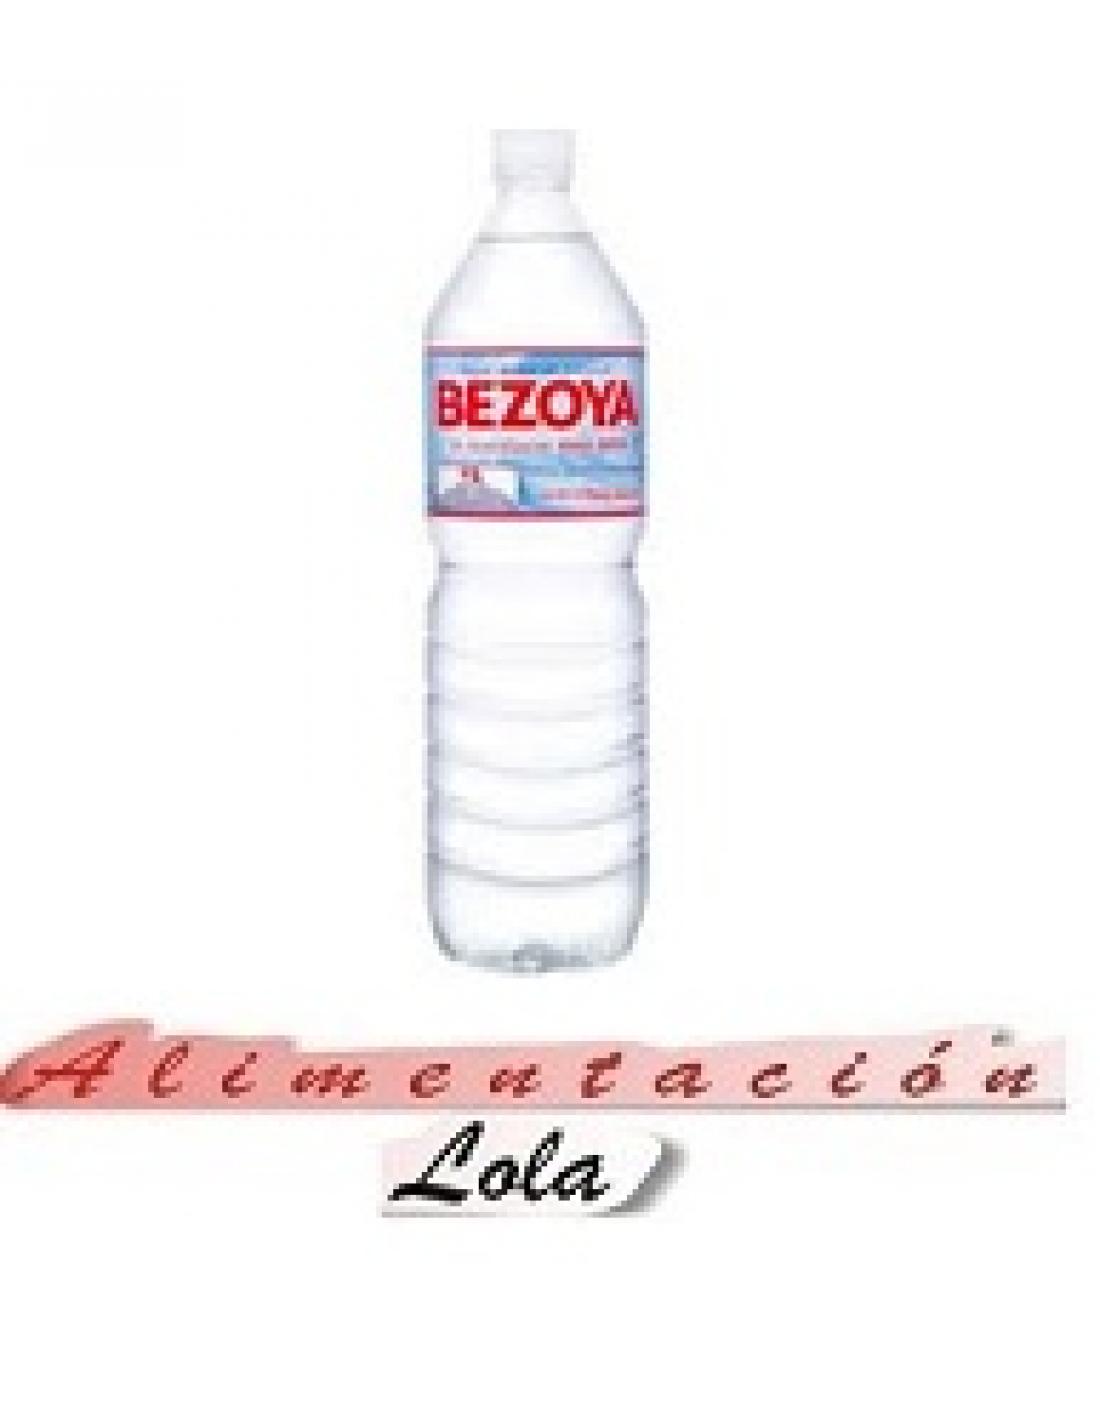 Qué se considera agua mineral? - Agua mineral natural Bezoya